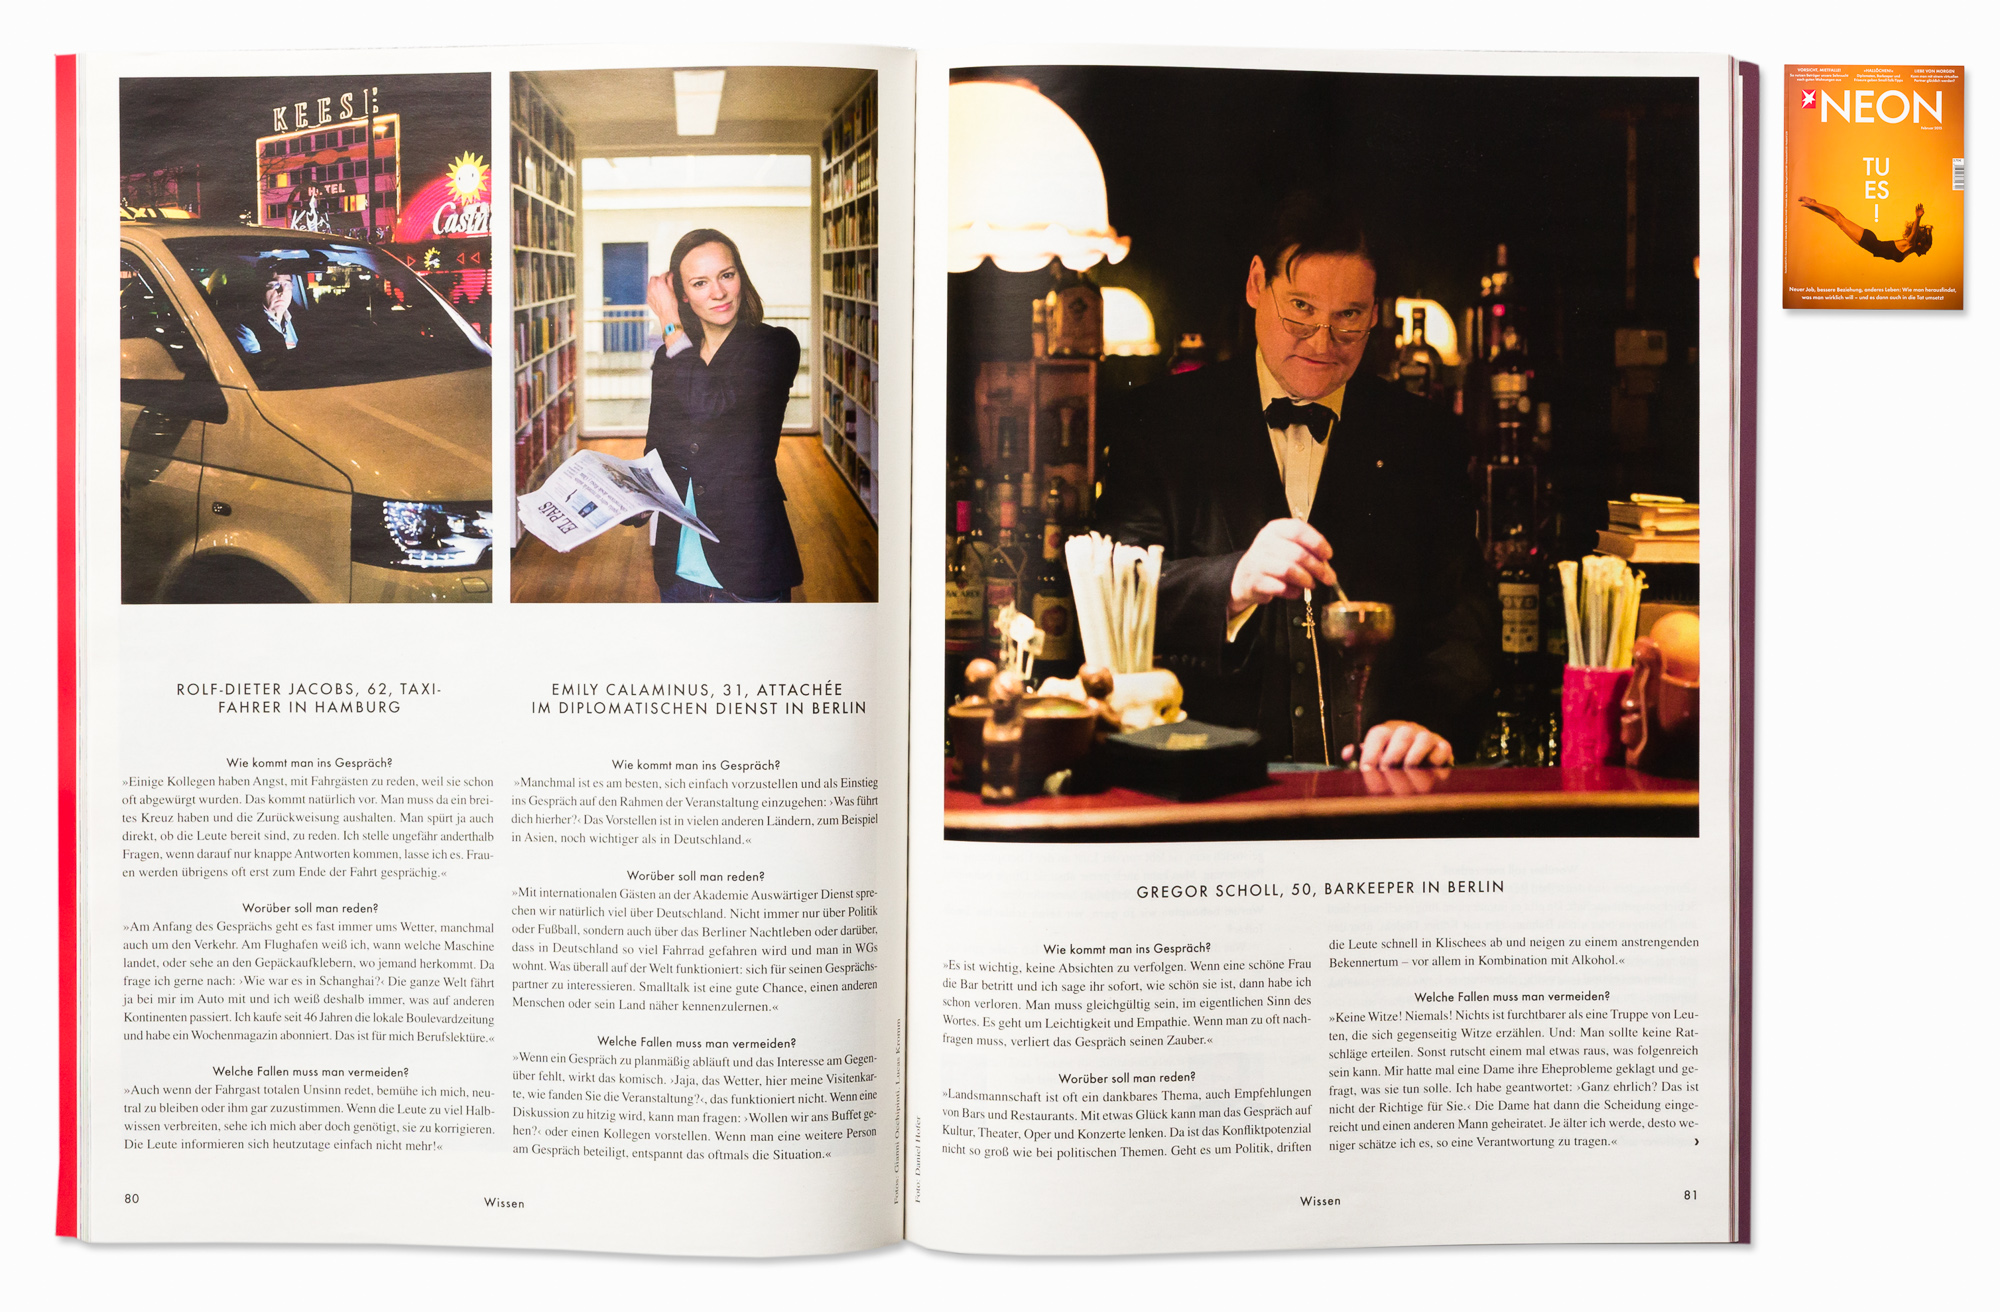   Gregor Scholl, "Rum Trader" bar, for NEON Magazine, Berlin, 2014  